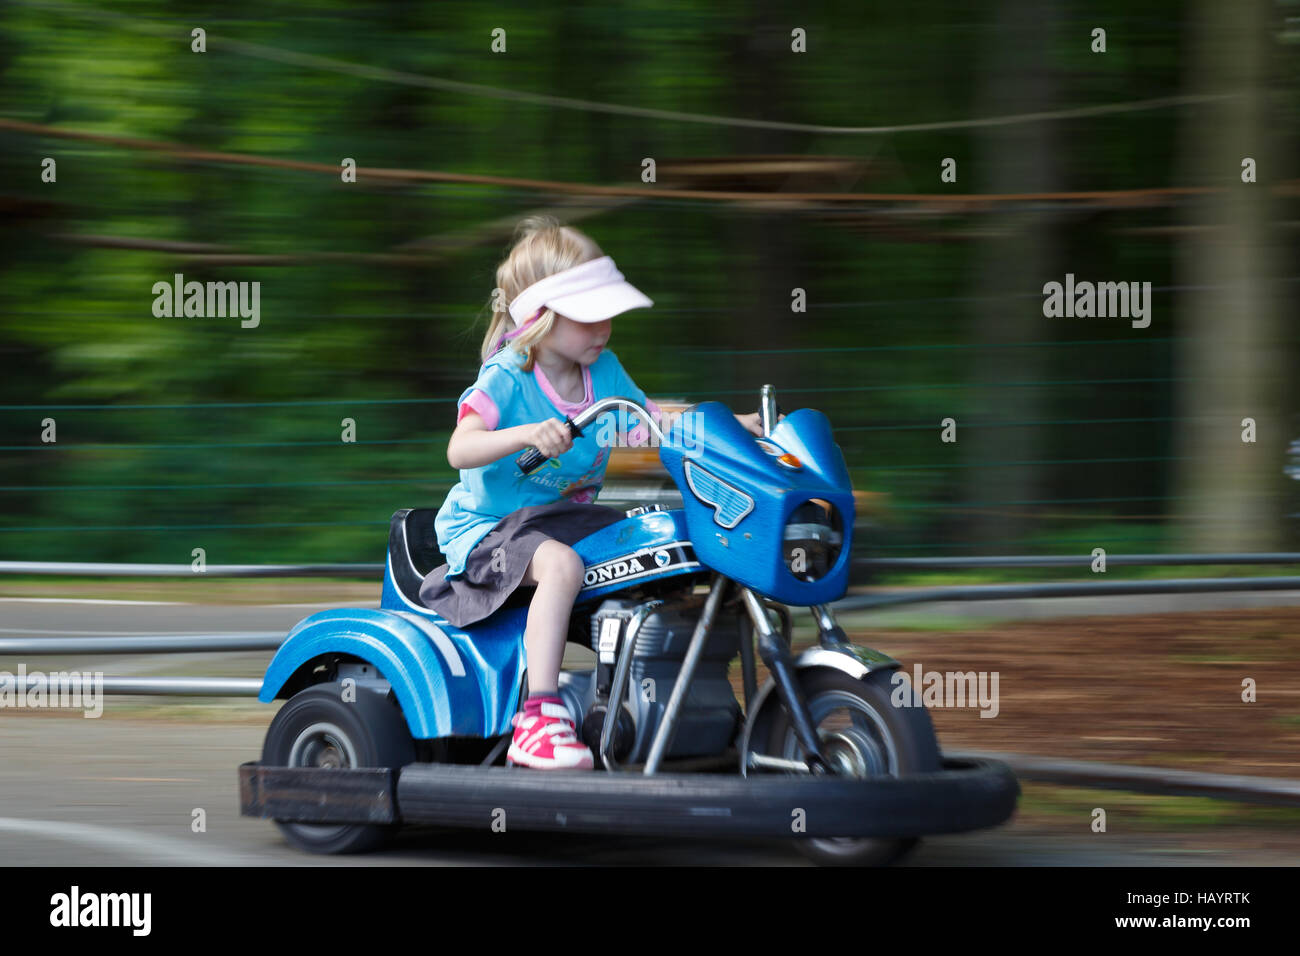 Girl riding a toy motorbike Stock Photo